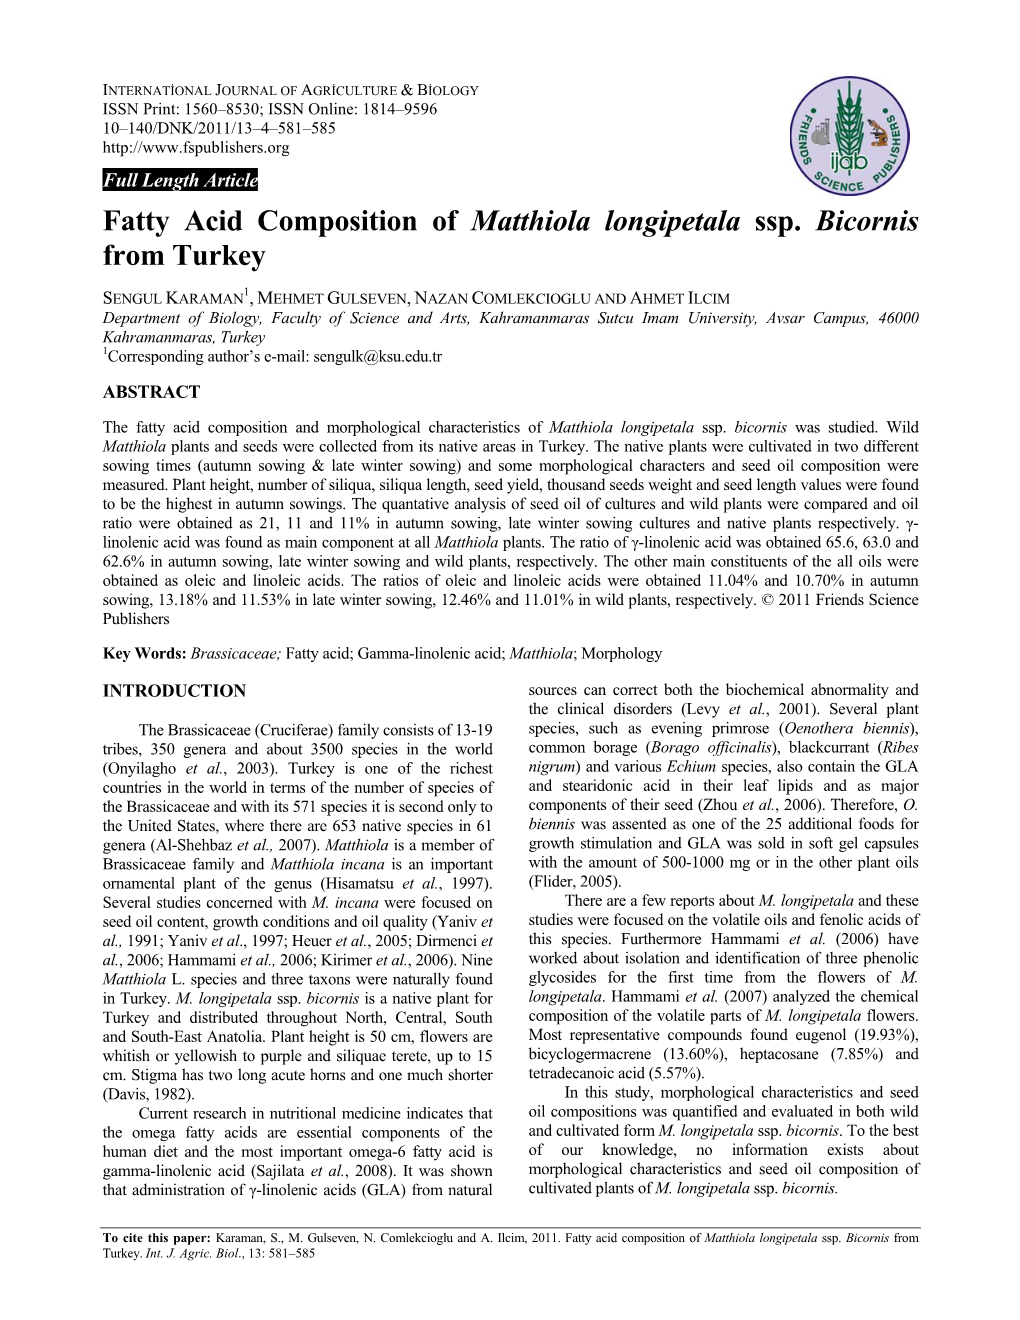 Fatty Acid Composition of Matthiola Longipetala Ssp. Bicornis from Turkey